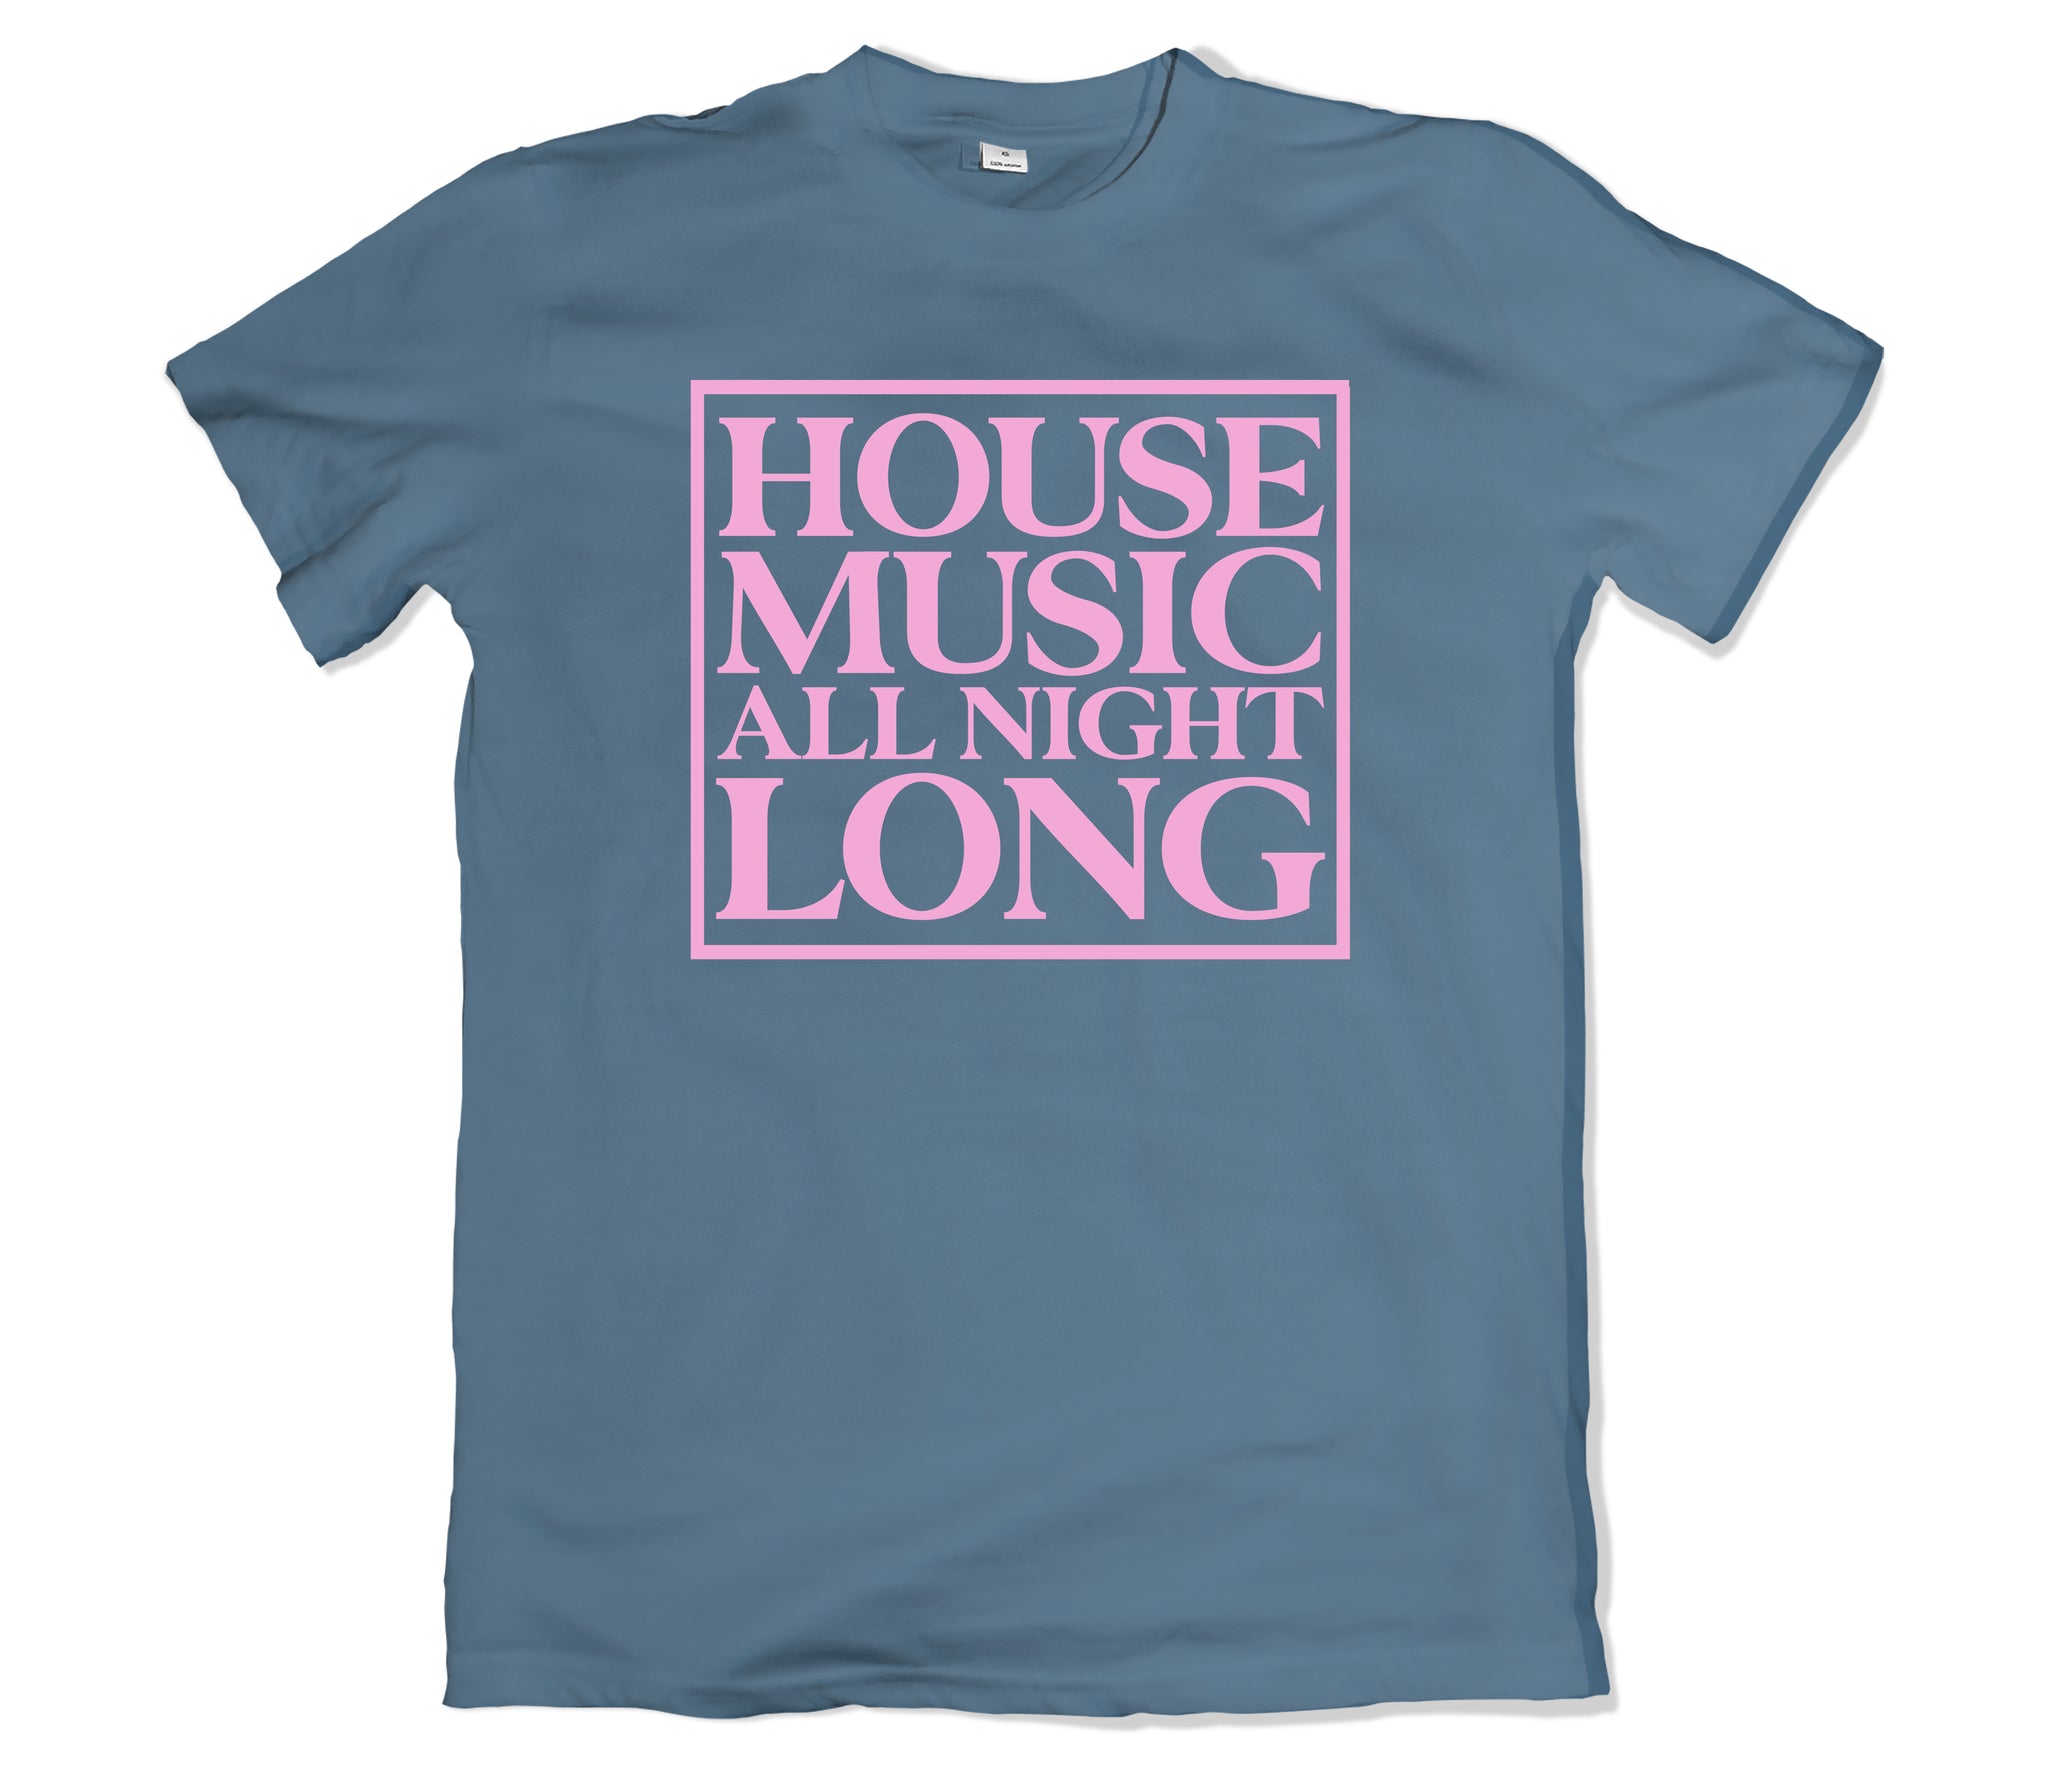 House Music All night Long Tee Shirt